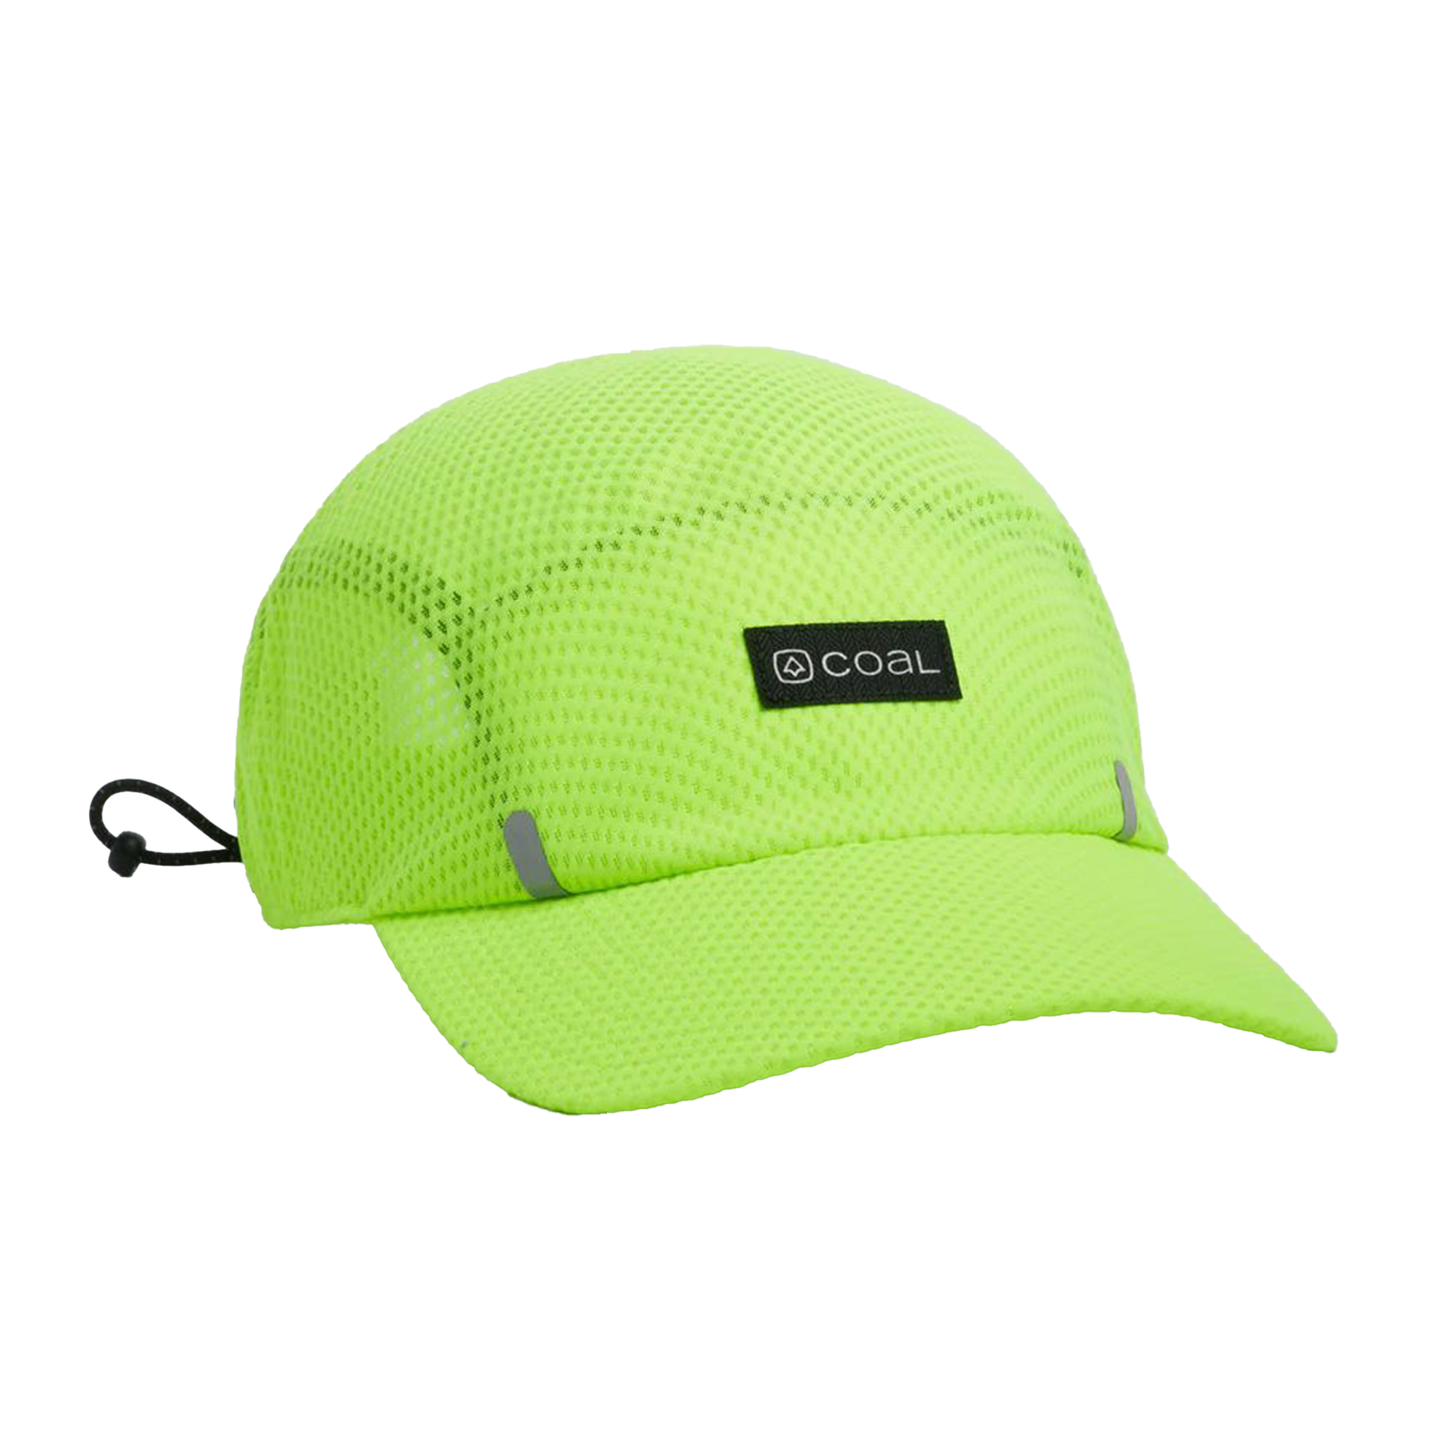 Coal Tempo Hat Neon Yellow OS Hats